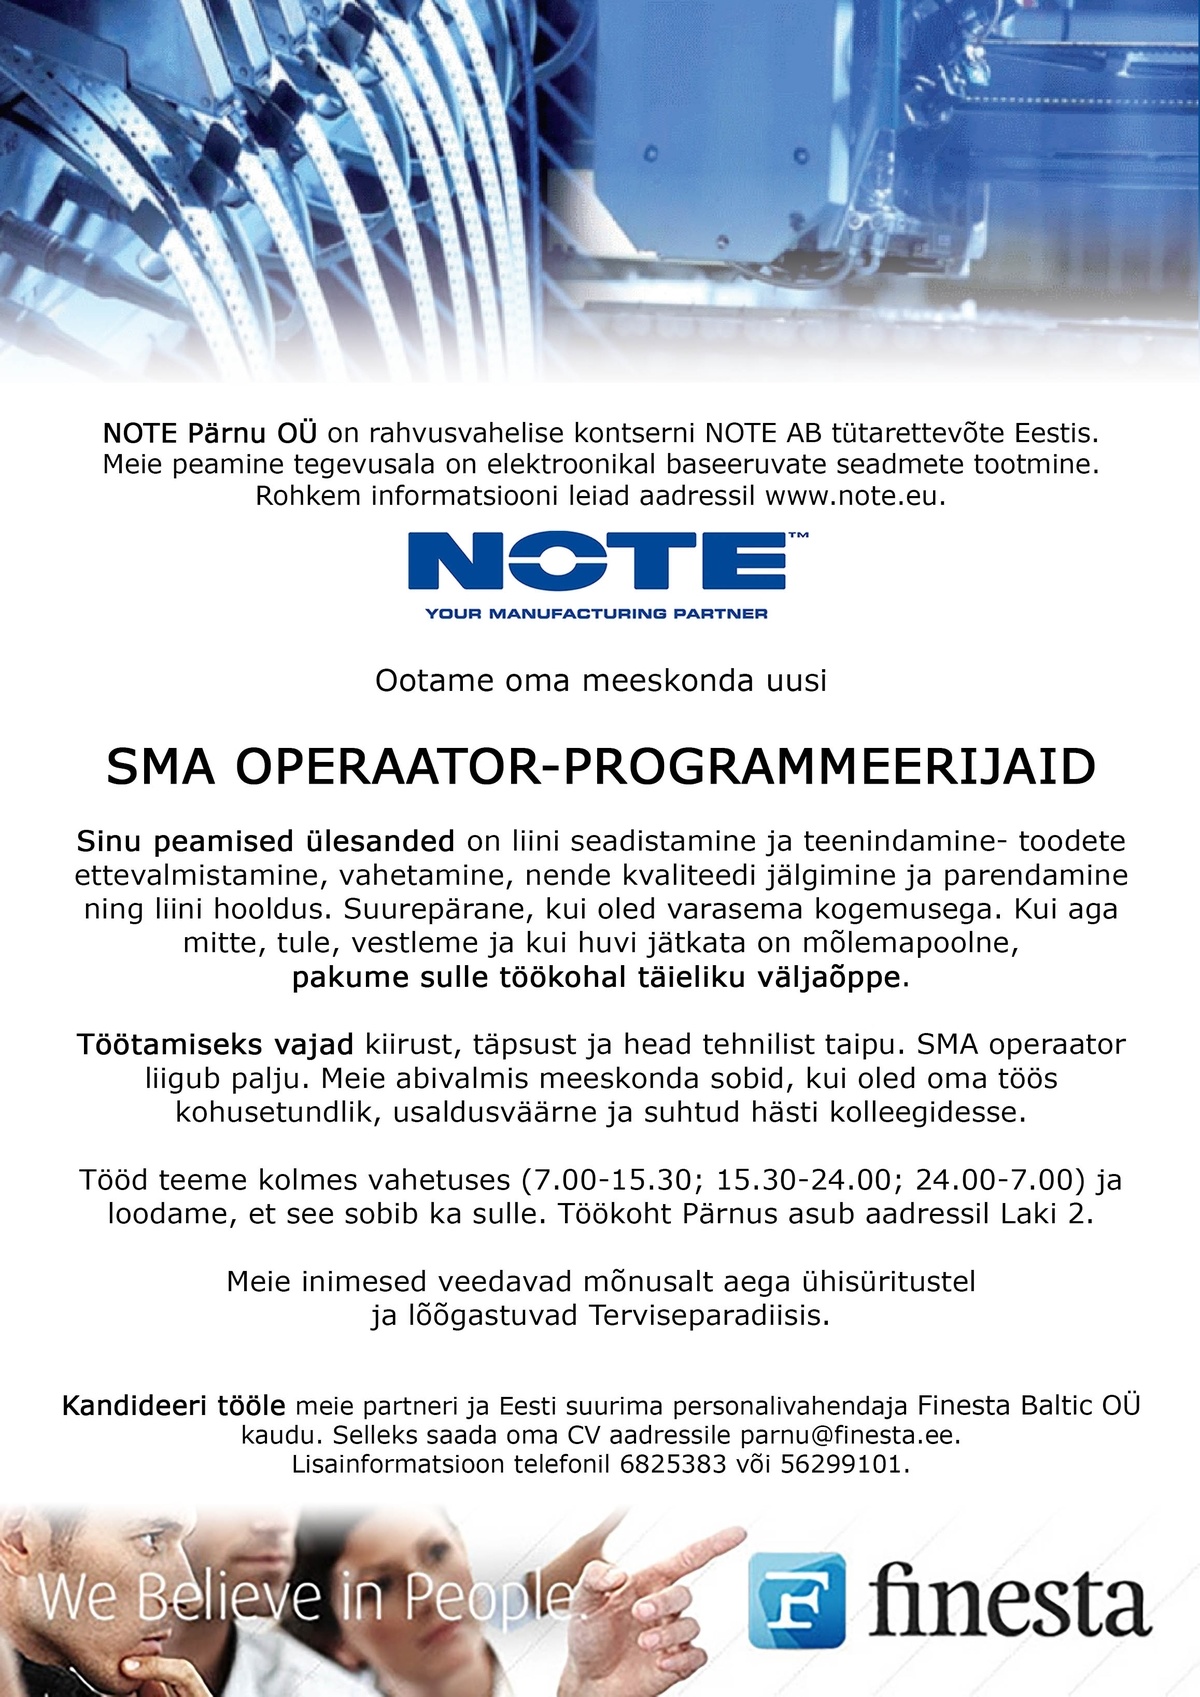 Finesta Baltic OÜ SMA operaator-programmeerija